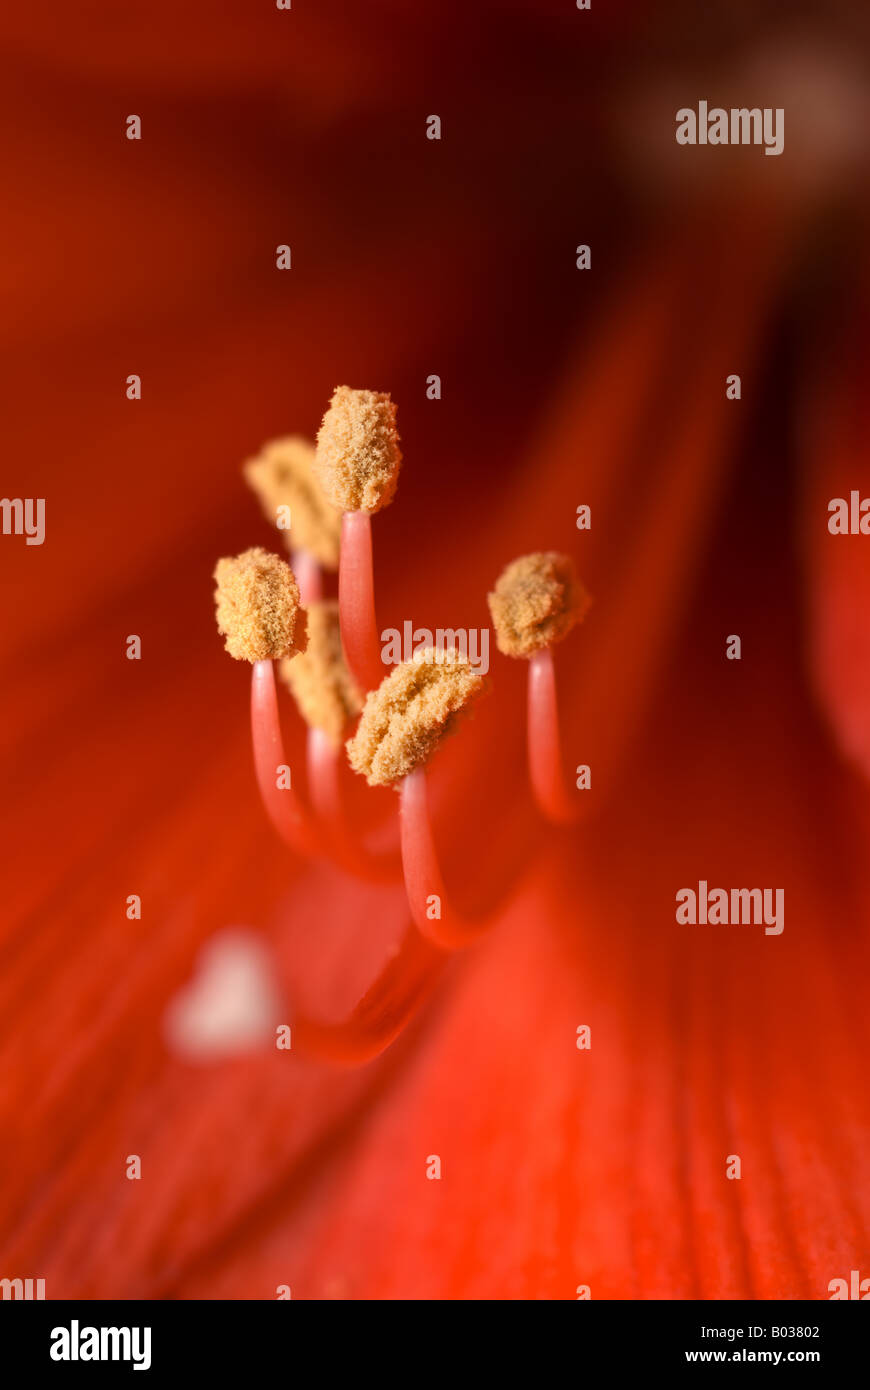 Staubfäden Hippeastrum Blume. Familie: Amaryllisgewächse. Staubfäden im Mittelpunkt. Stockfoto